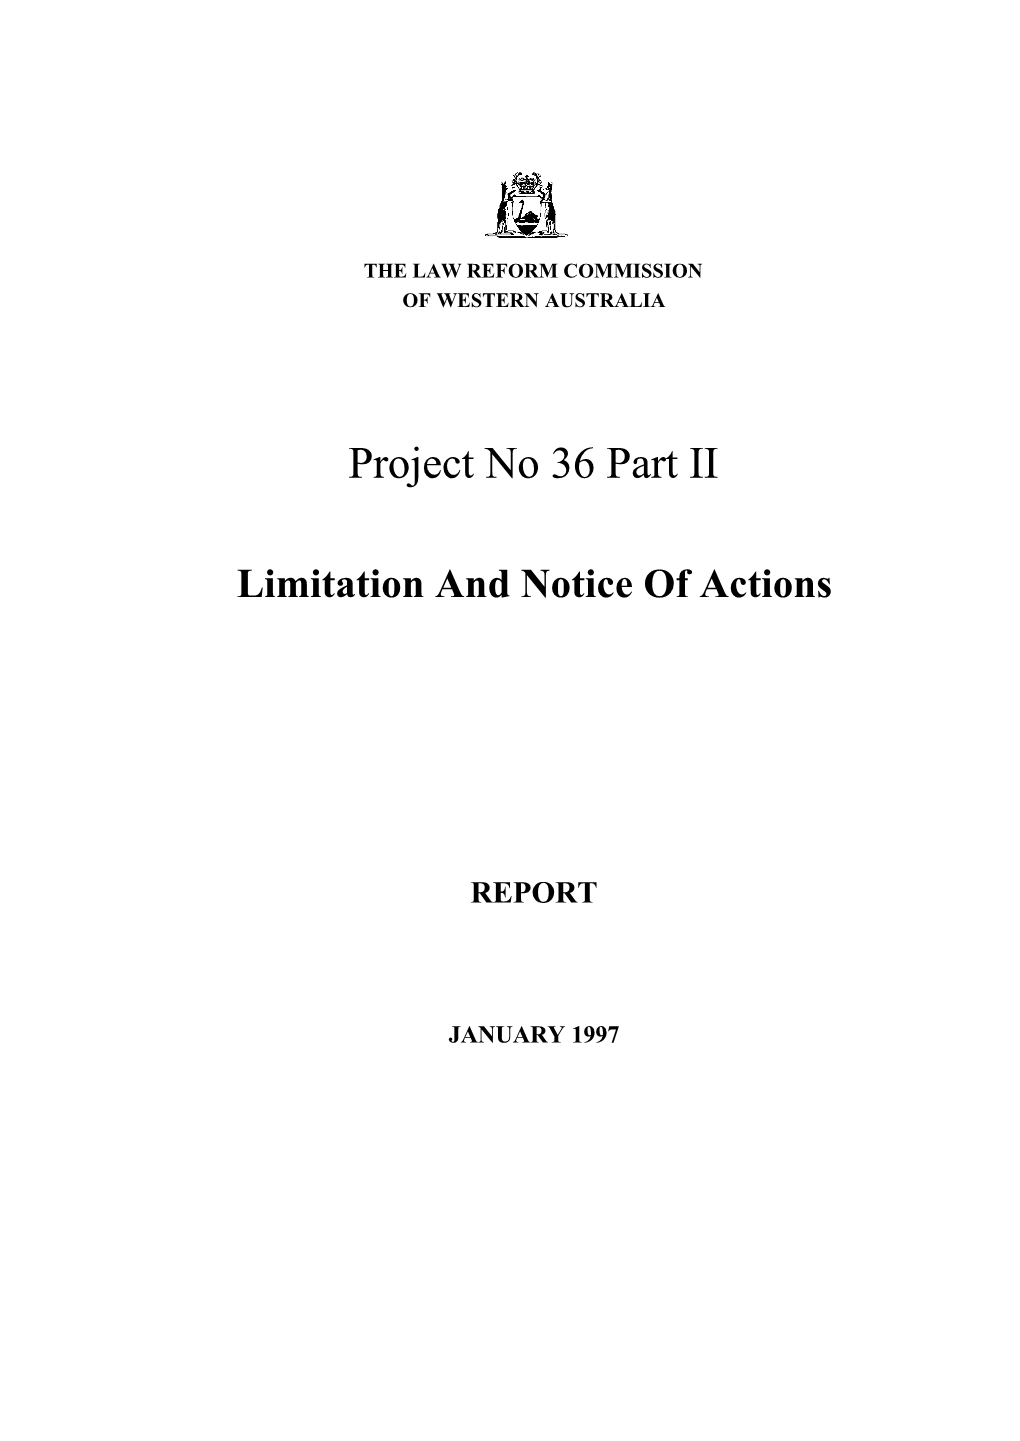 Project 36(II) Final Report